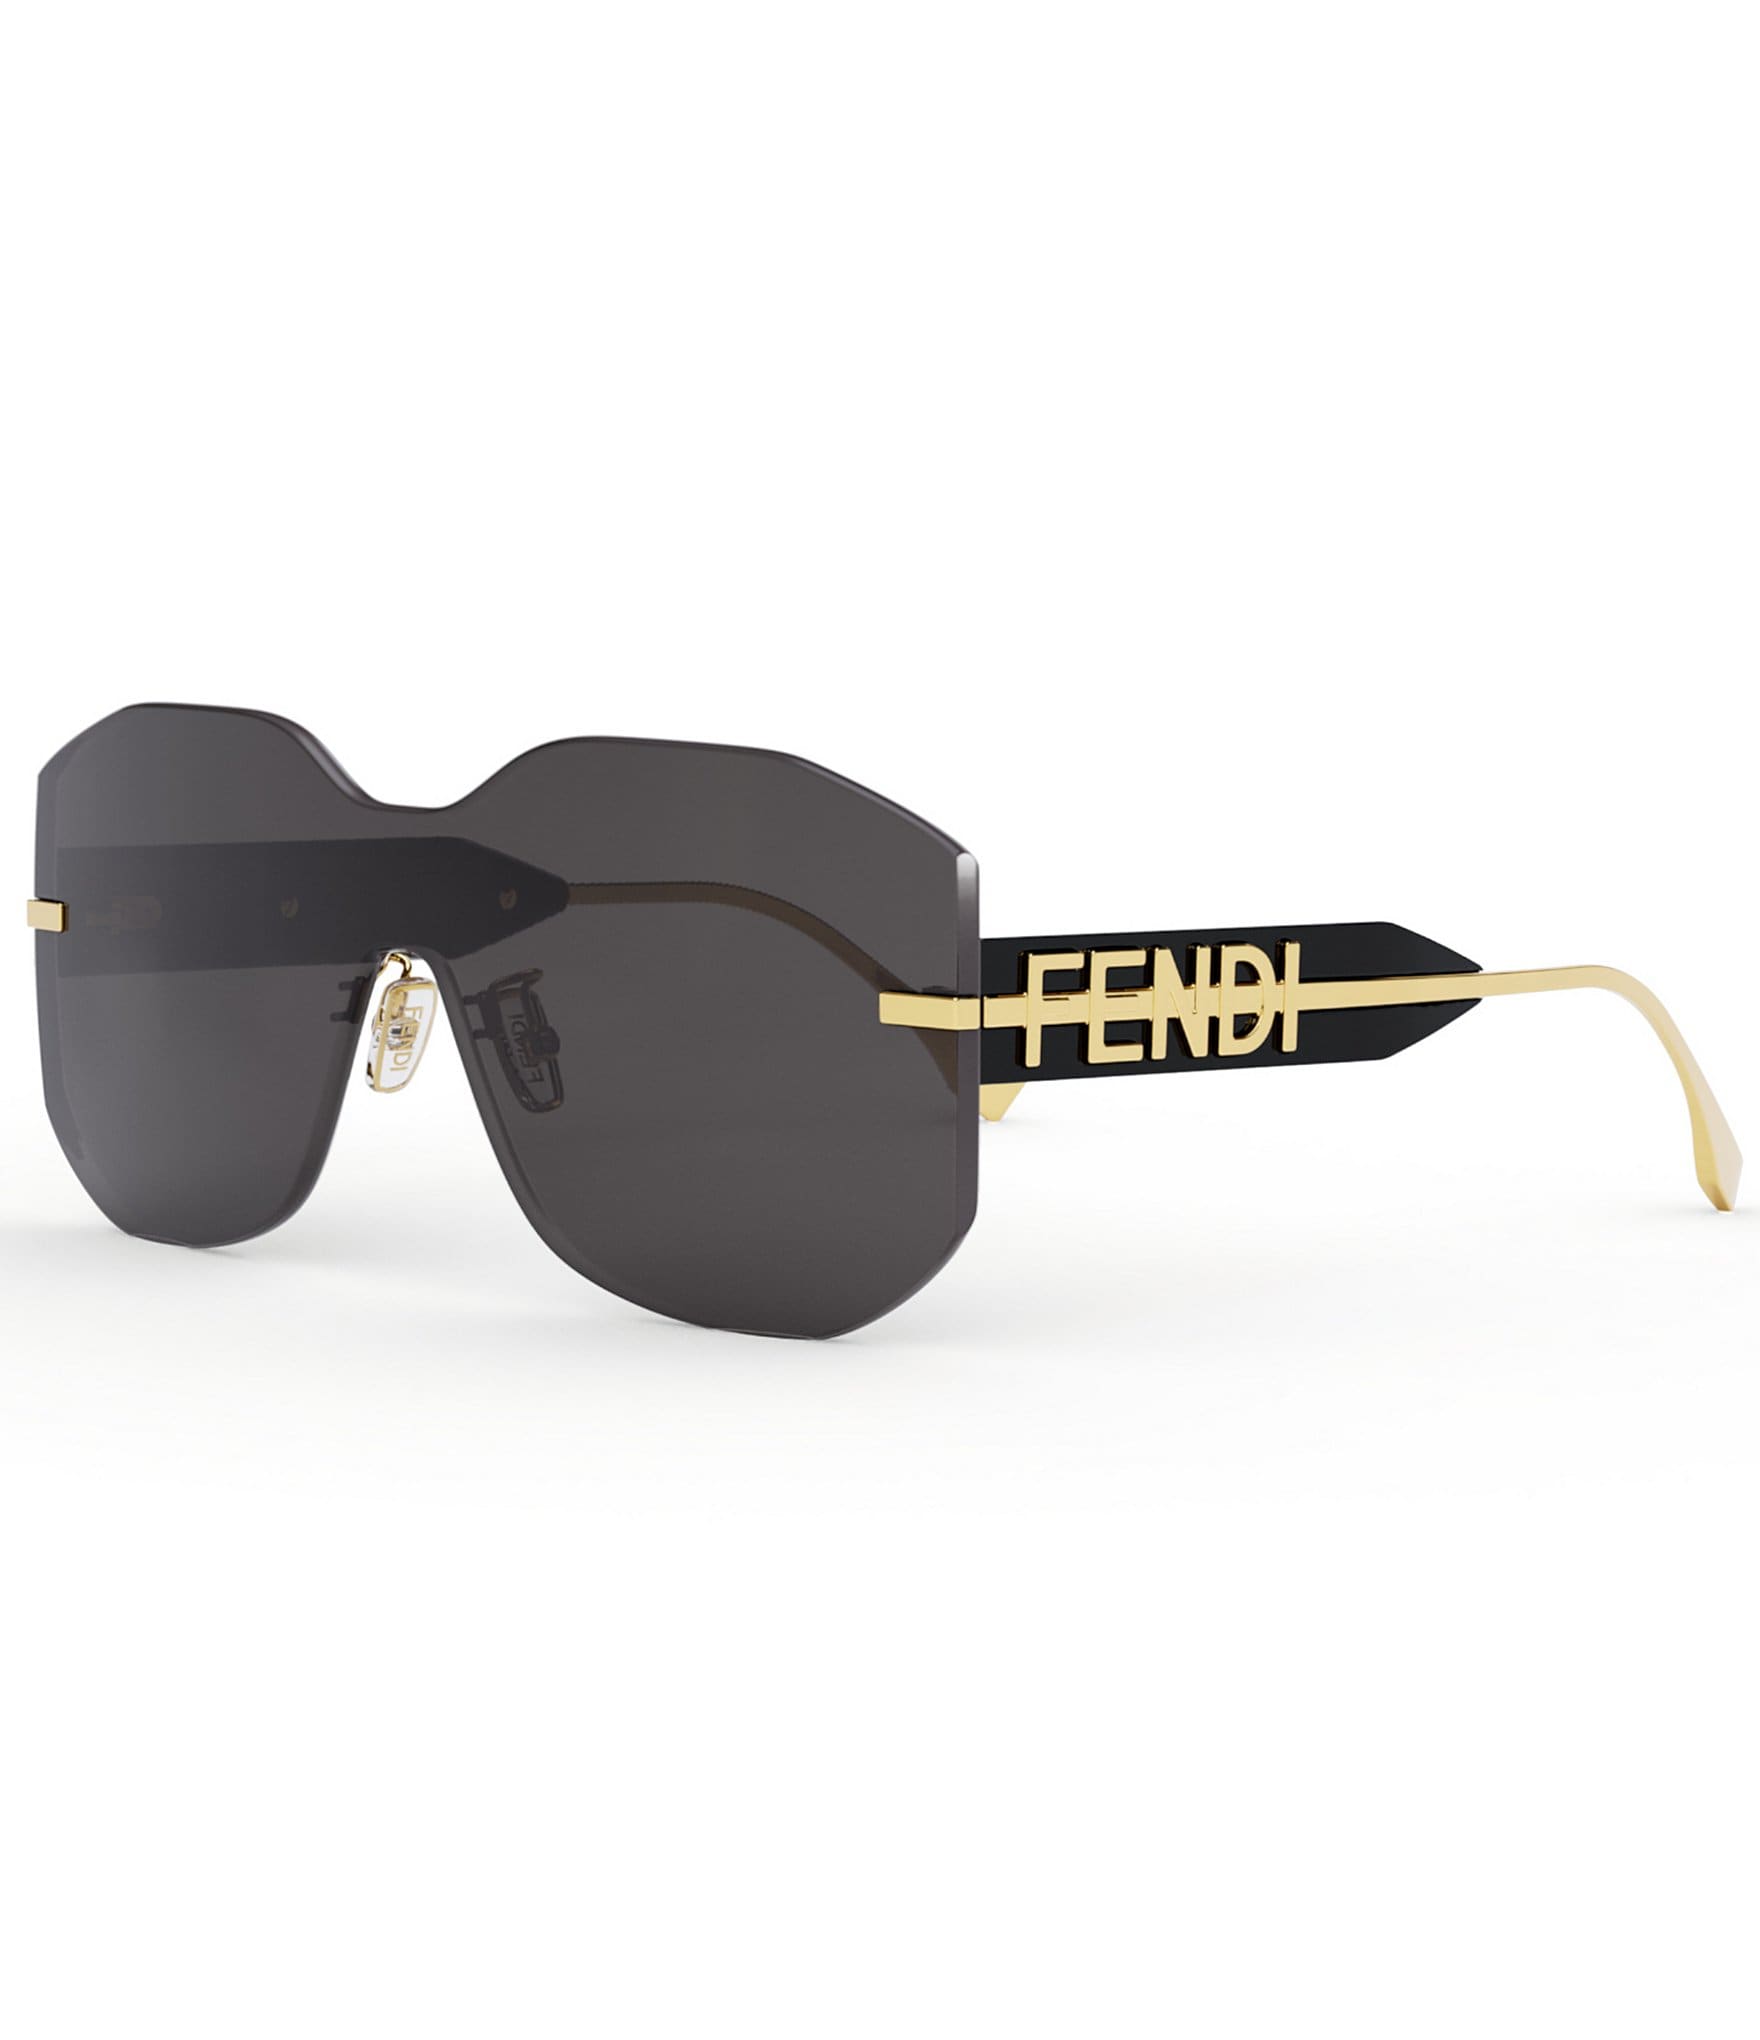 Fendi Fine Cat Eye Sunglasses in Multicoloured - Fendi